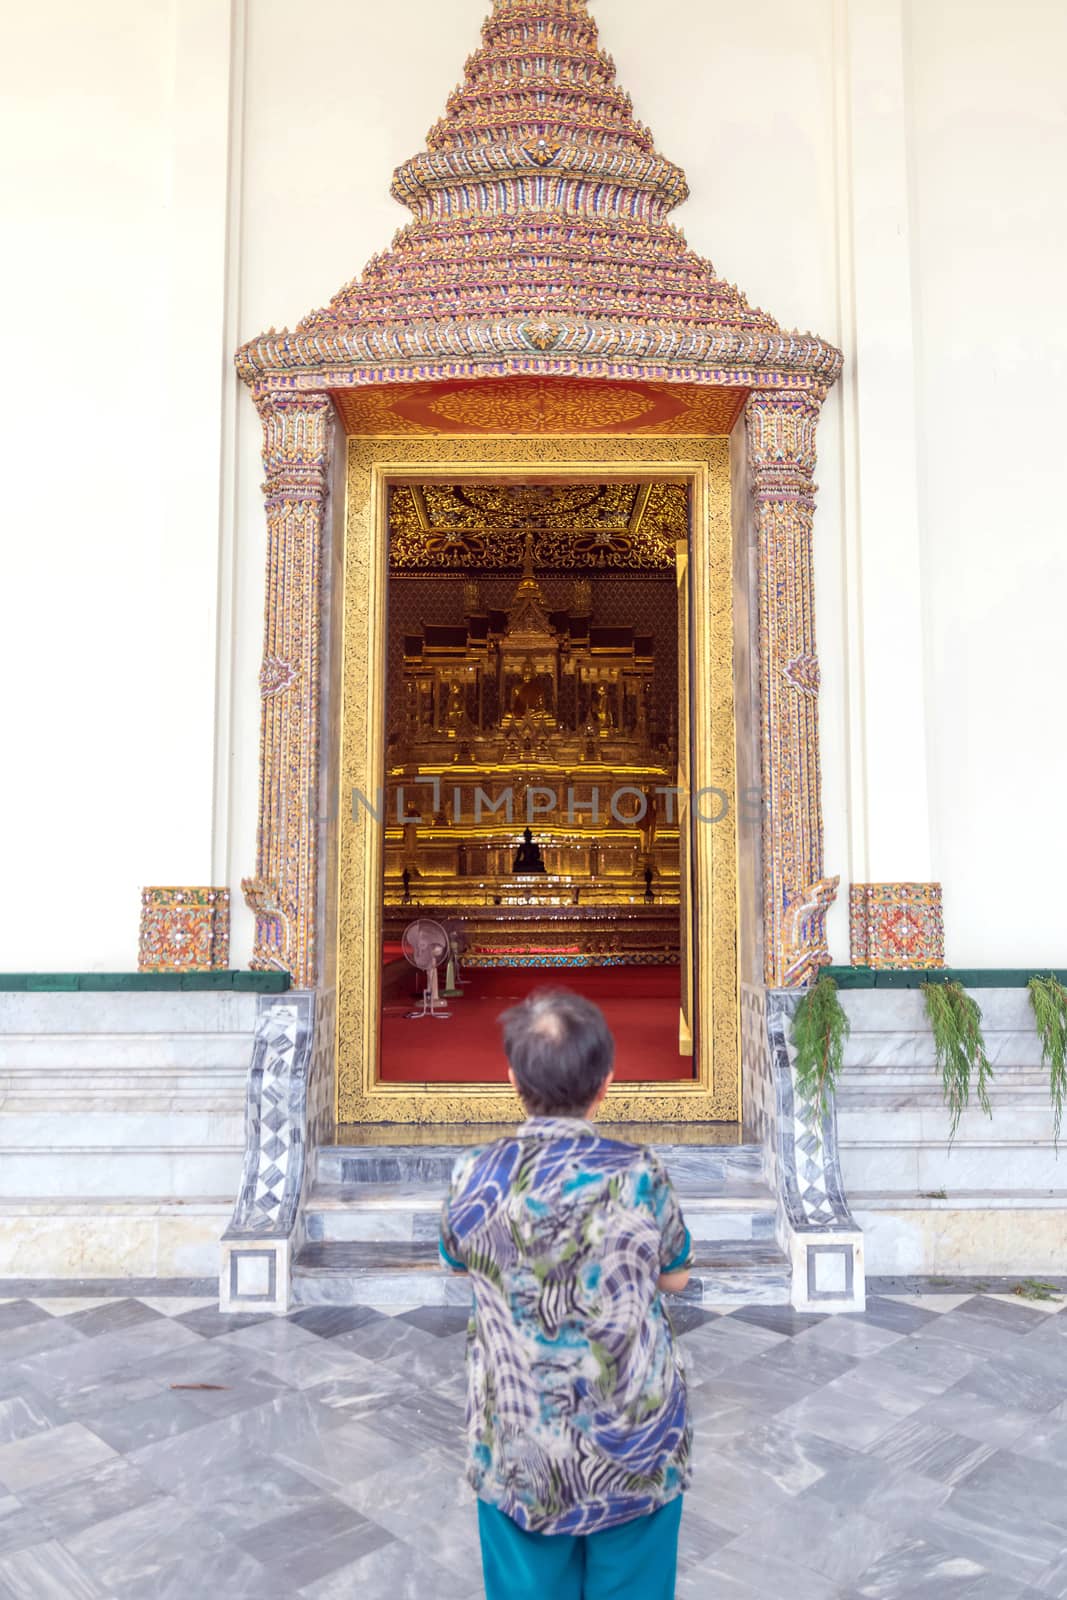 Bangkok, Thailand - March 19, 2016 : Sanctuary in temple  at Wat Thep Sirin Thrawat Ratchaworawihan.